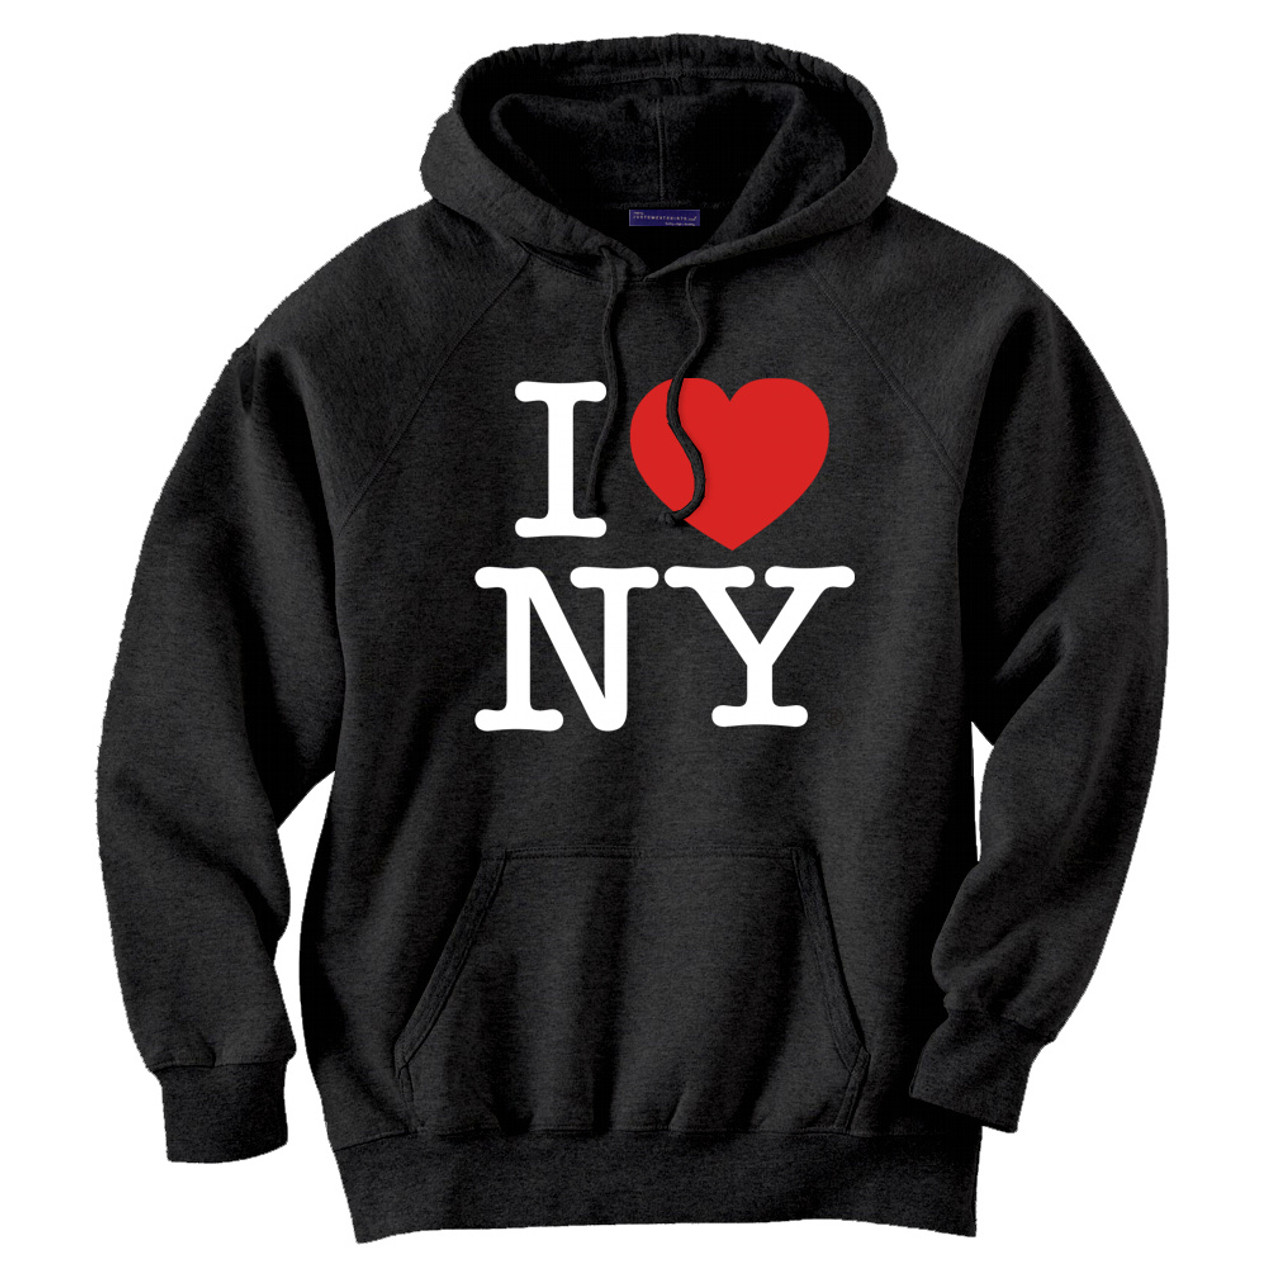 I Love NY Black Hooded Sweatshirt NYC Hoodie